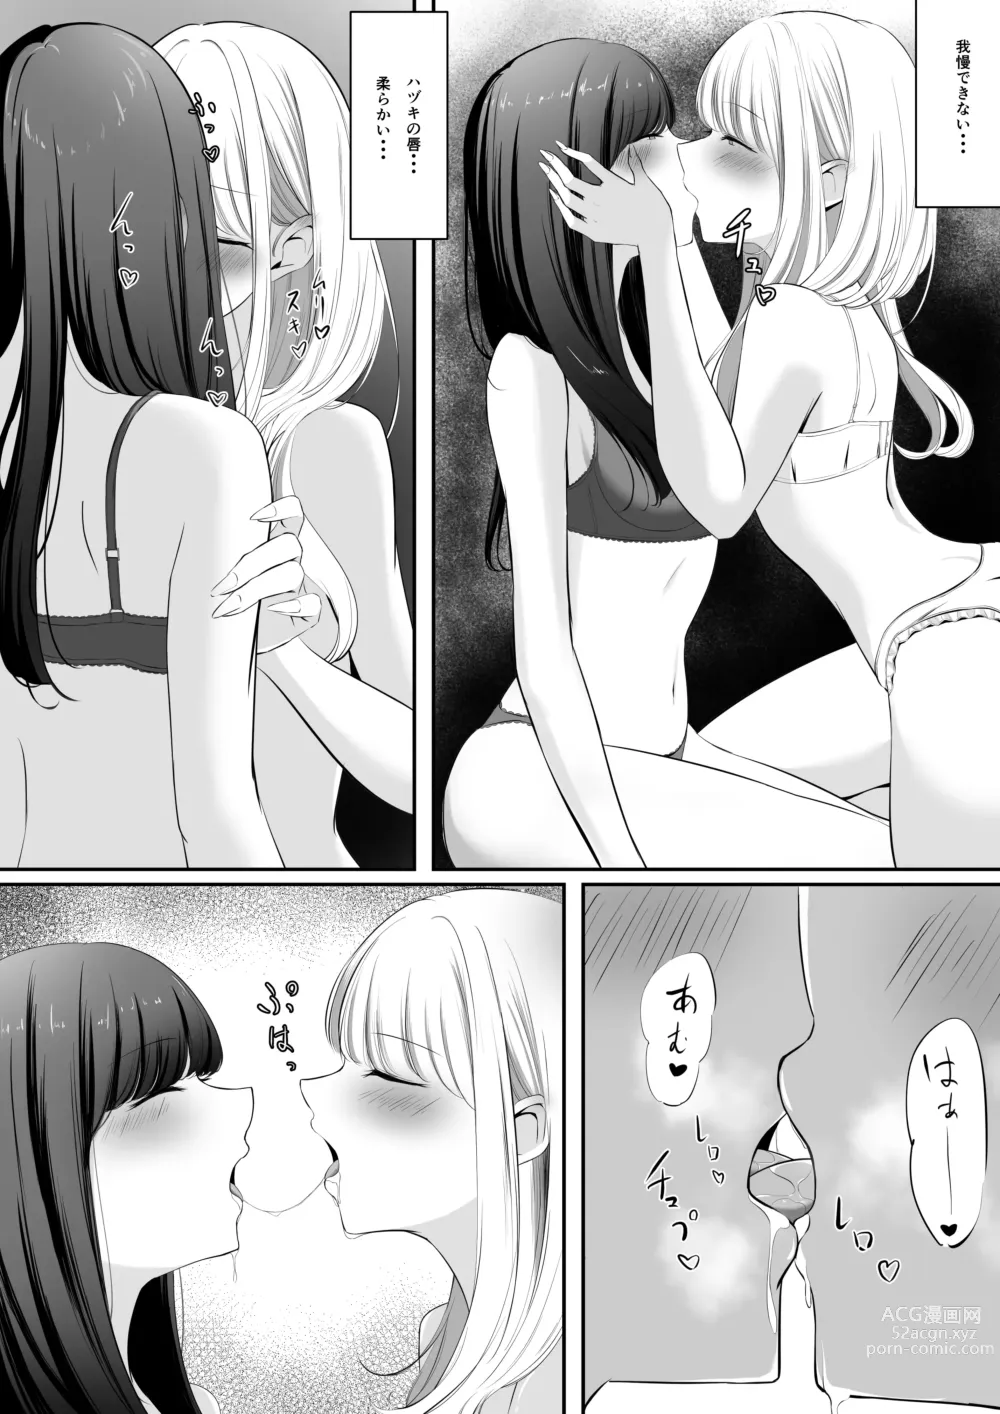 Page 4 of doujinshi Yuri comic Part 1,2 and 3.